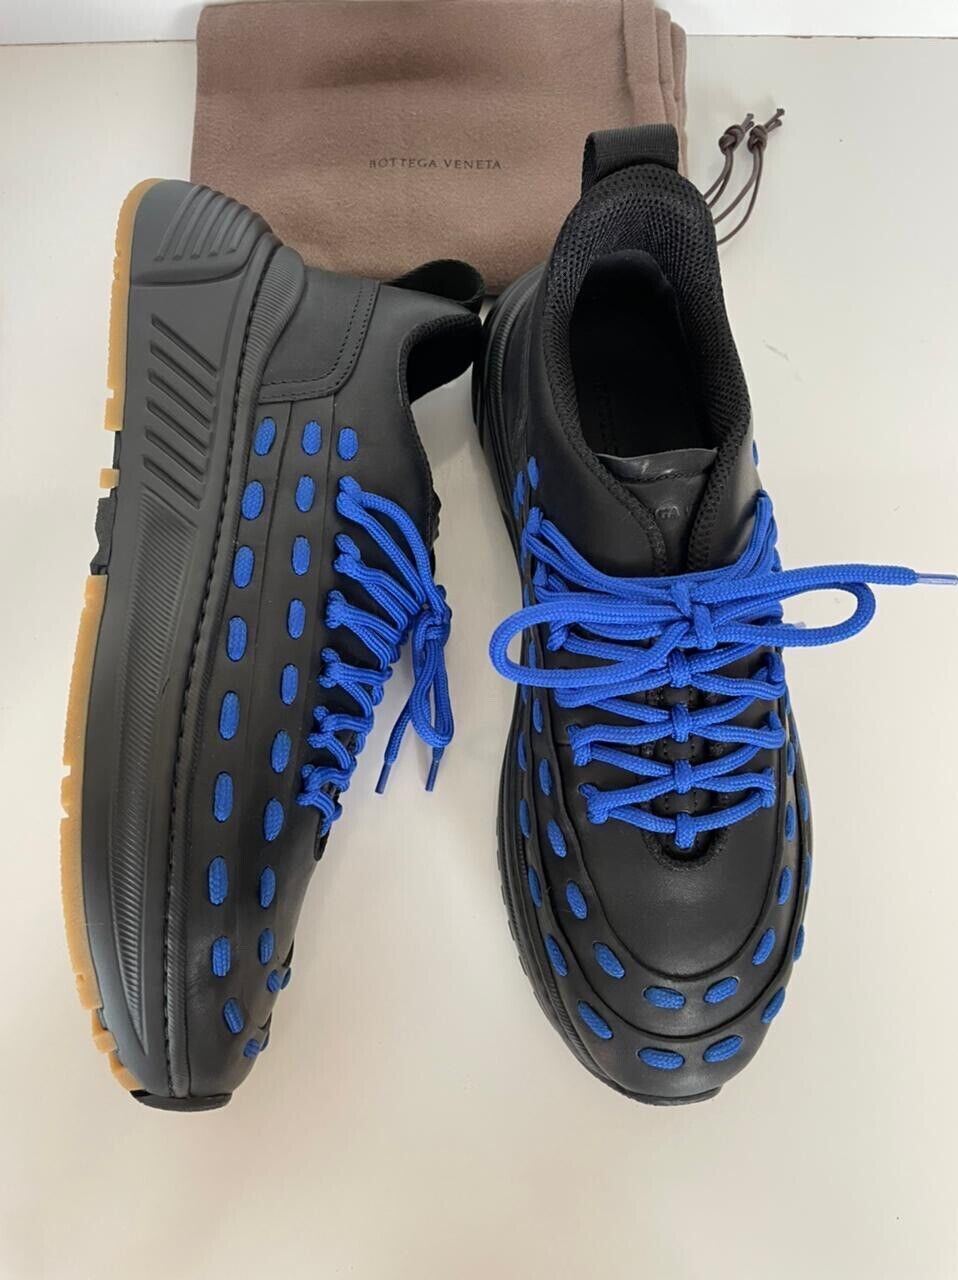 NIB $950 Bottega Veneta Mens Leather Black/Blue Sneakers 7.5 US 578305 1014